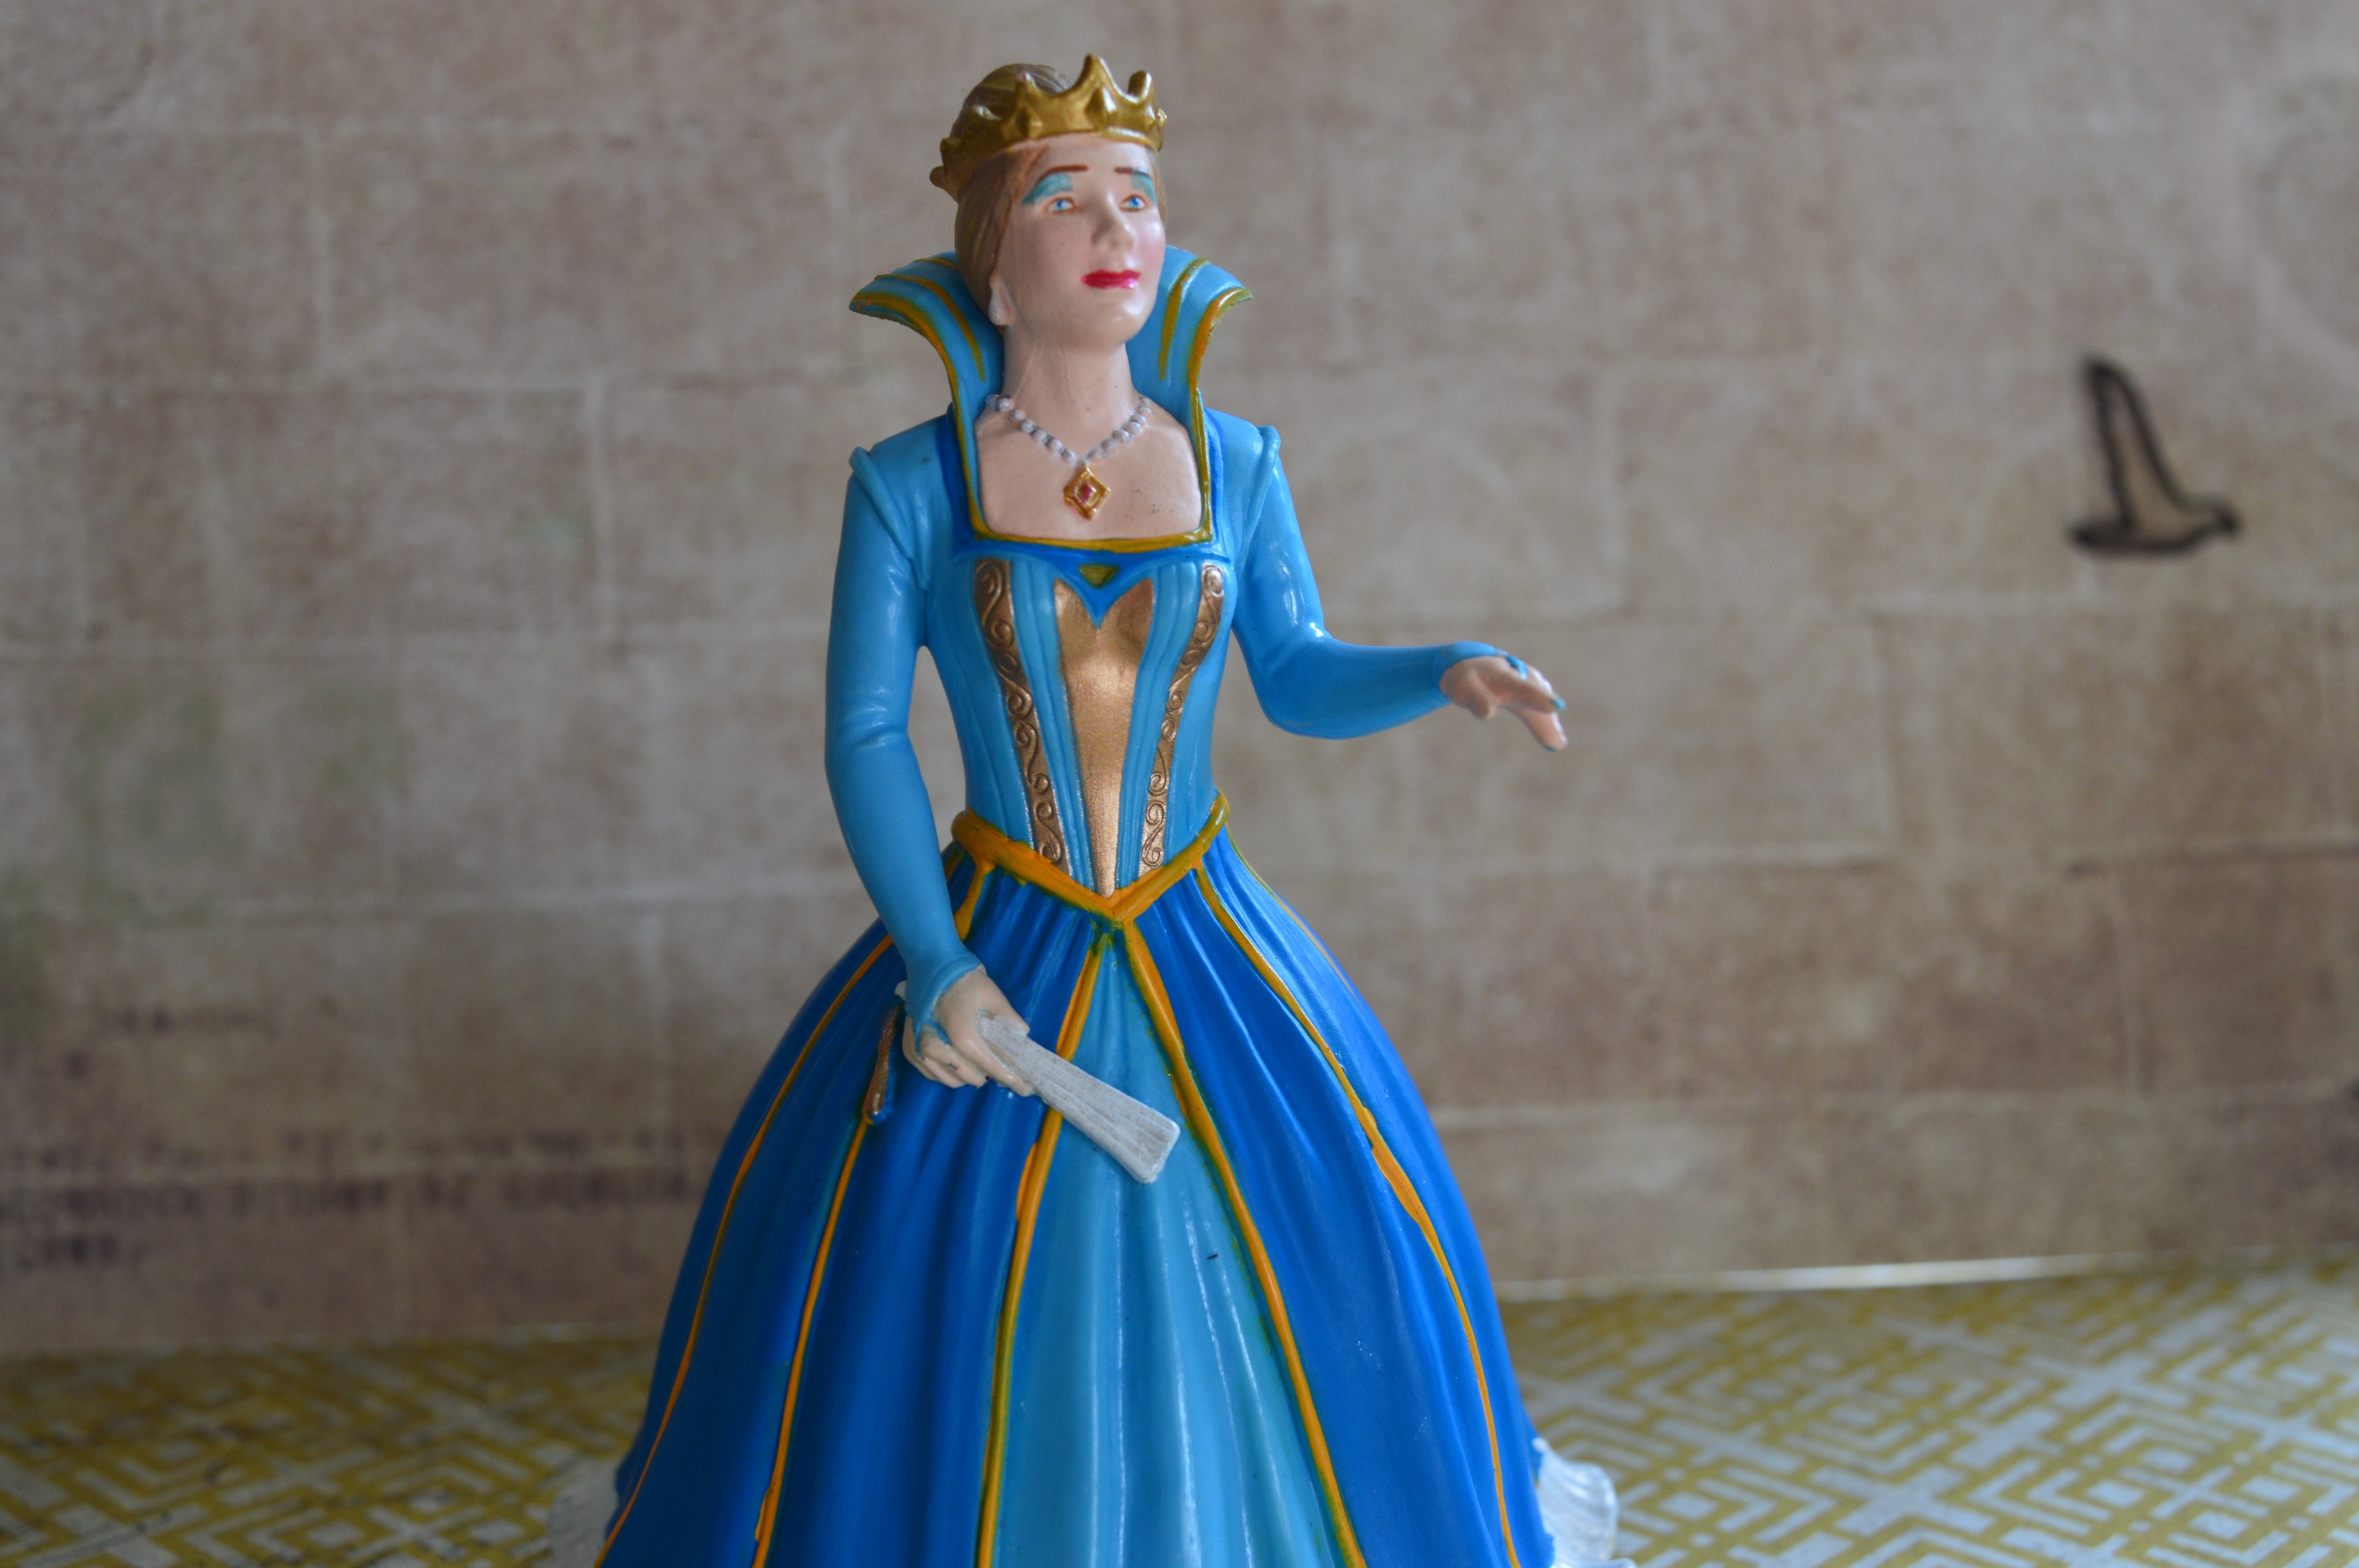 queen in blue dress figurine